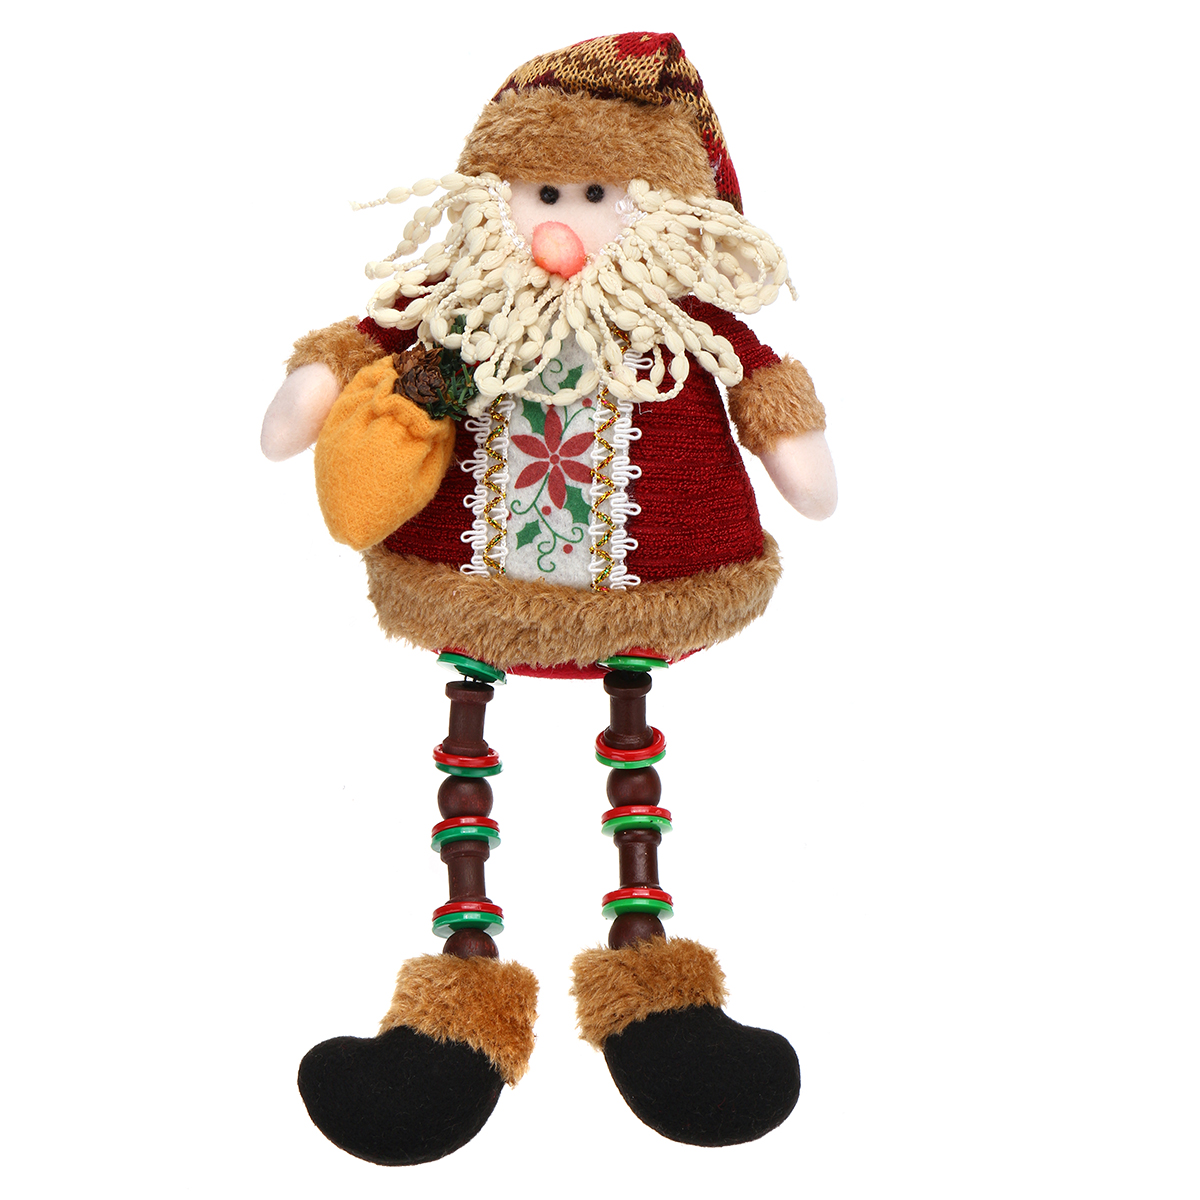 Santa-Snowman-Reindeer-Doll-Christmas-Decoration-Tree-Hanging-Ornament-Gift-1352337-8